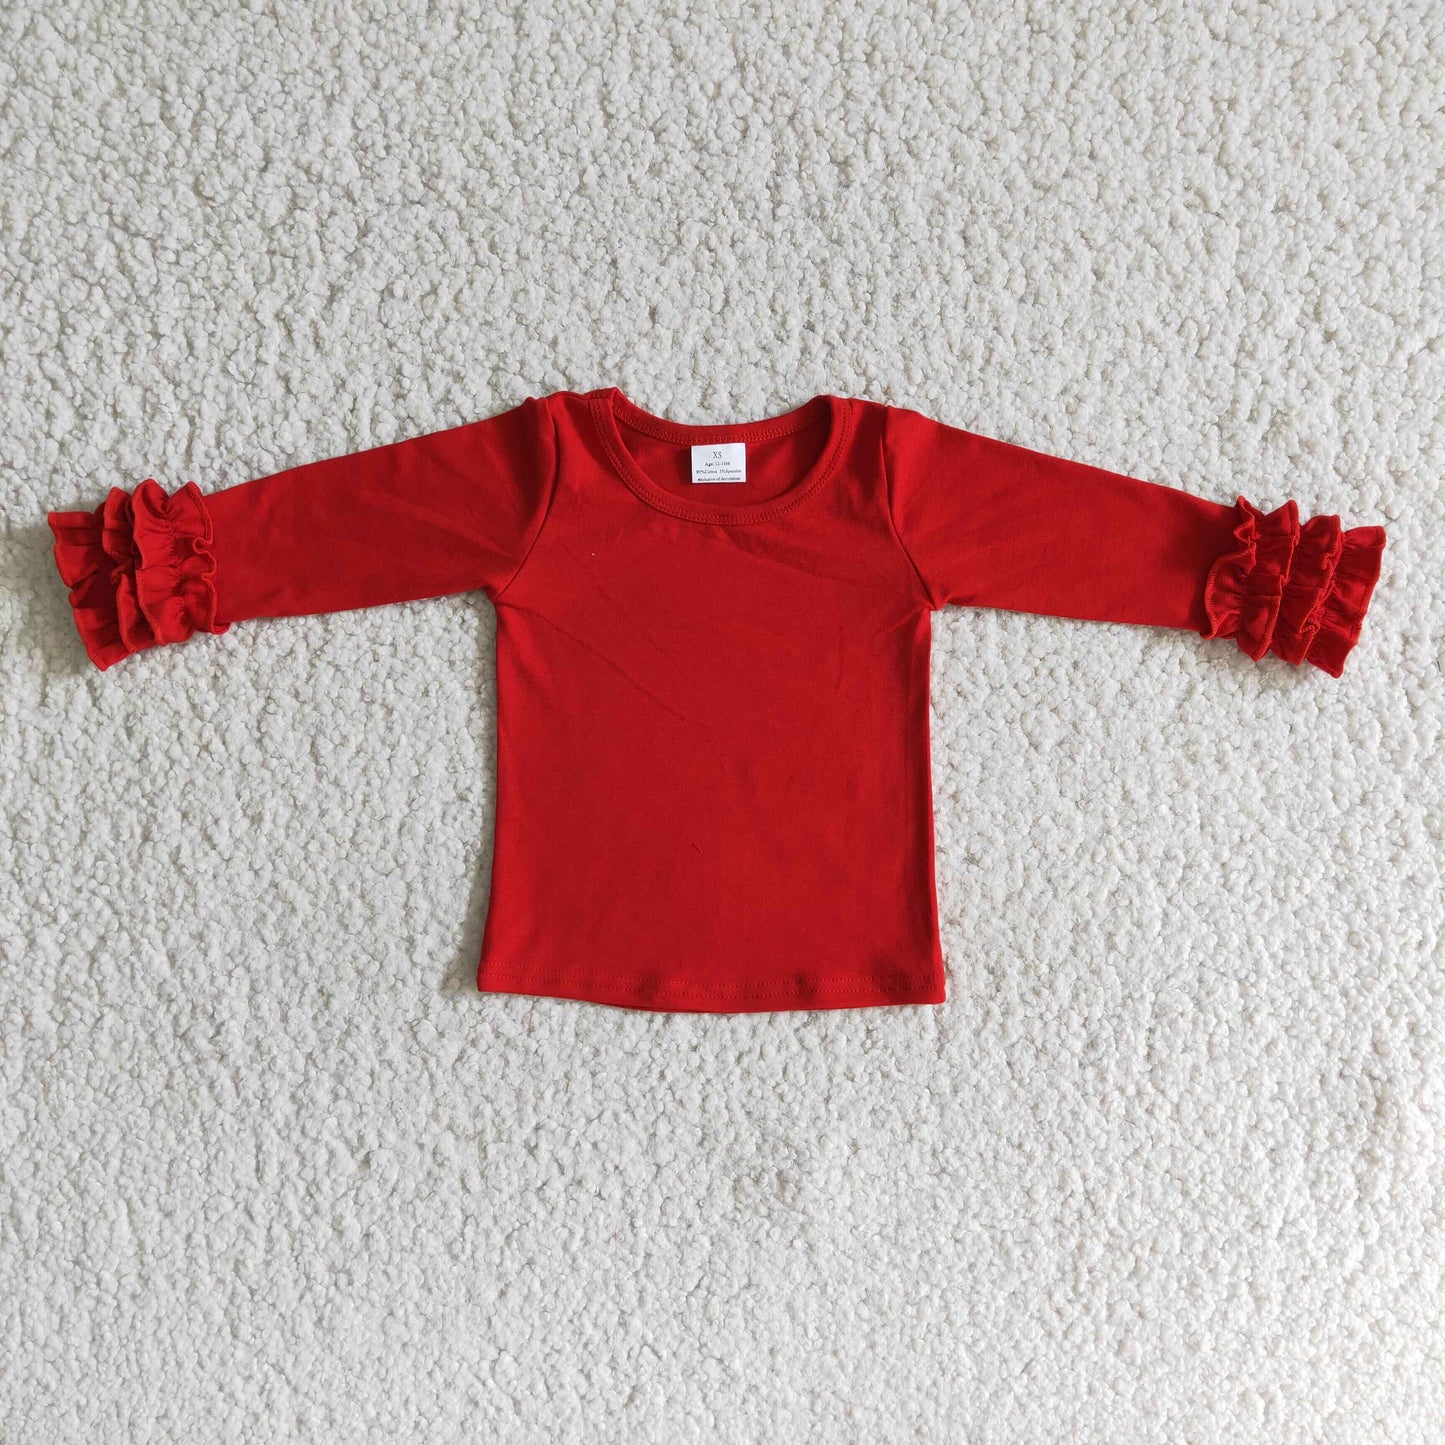 Cotton Fabric Red Ruffles Long Sleeve Top